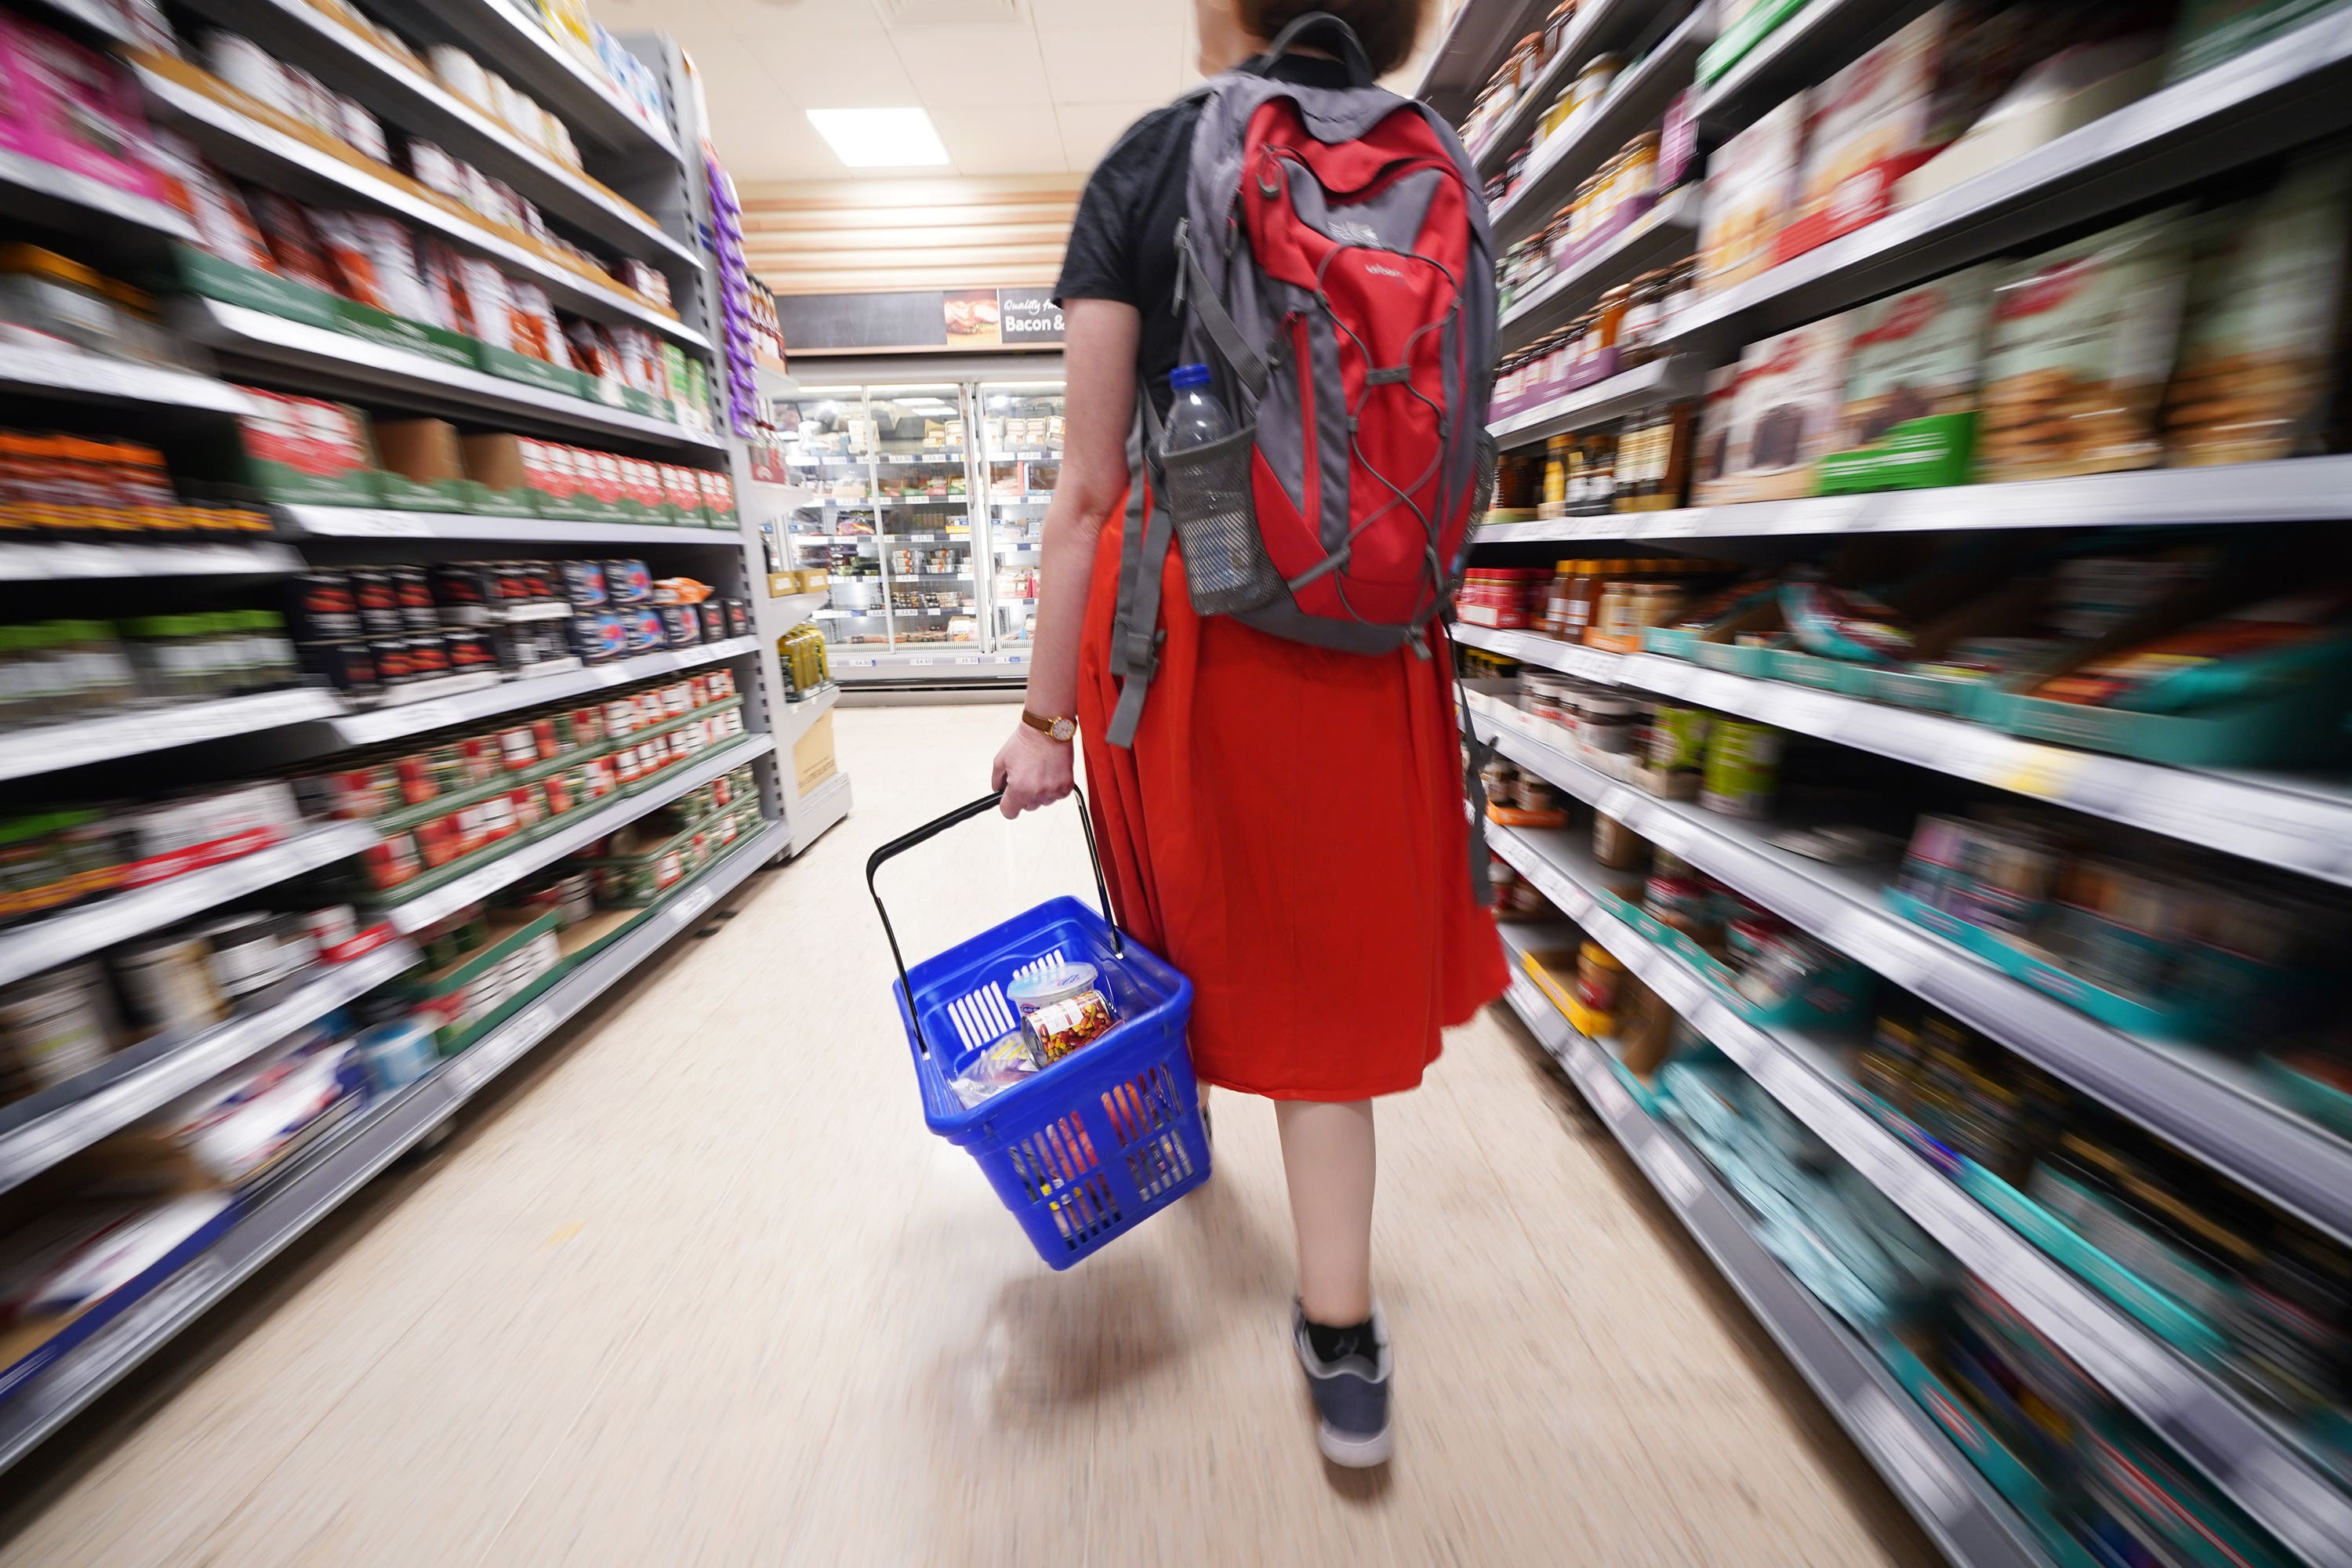 A shopper walking through the aisle of a supermarket.